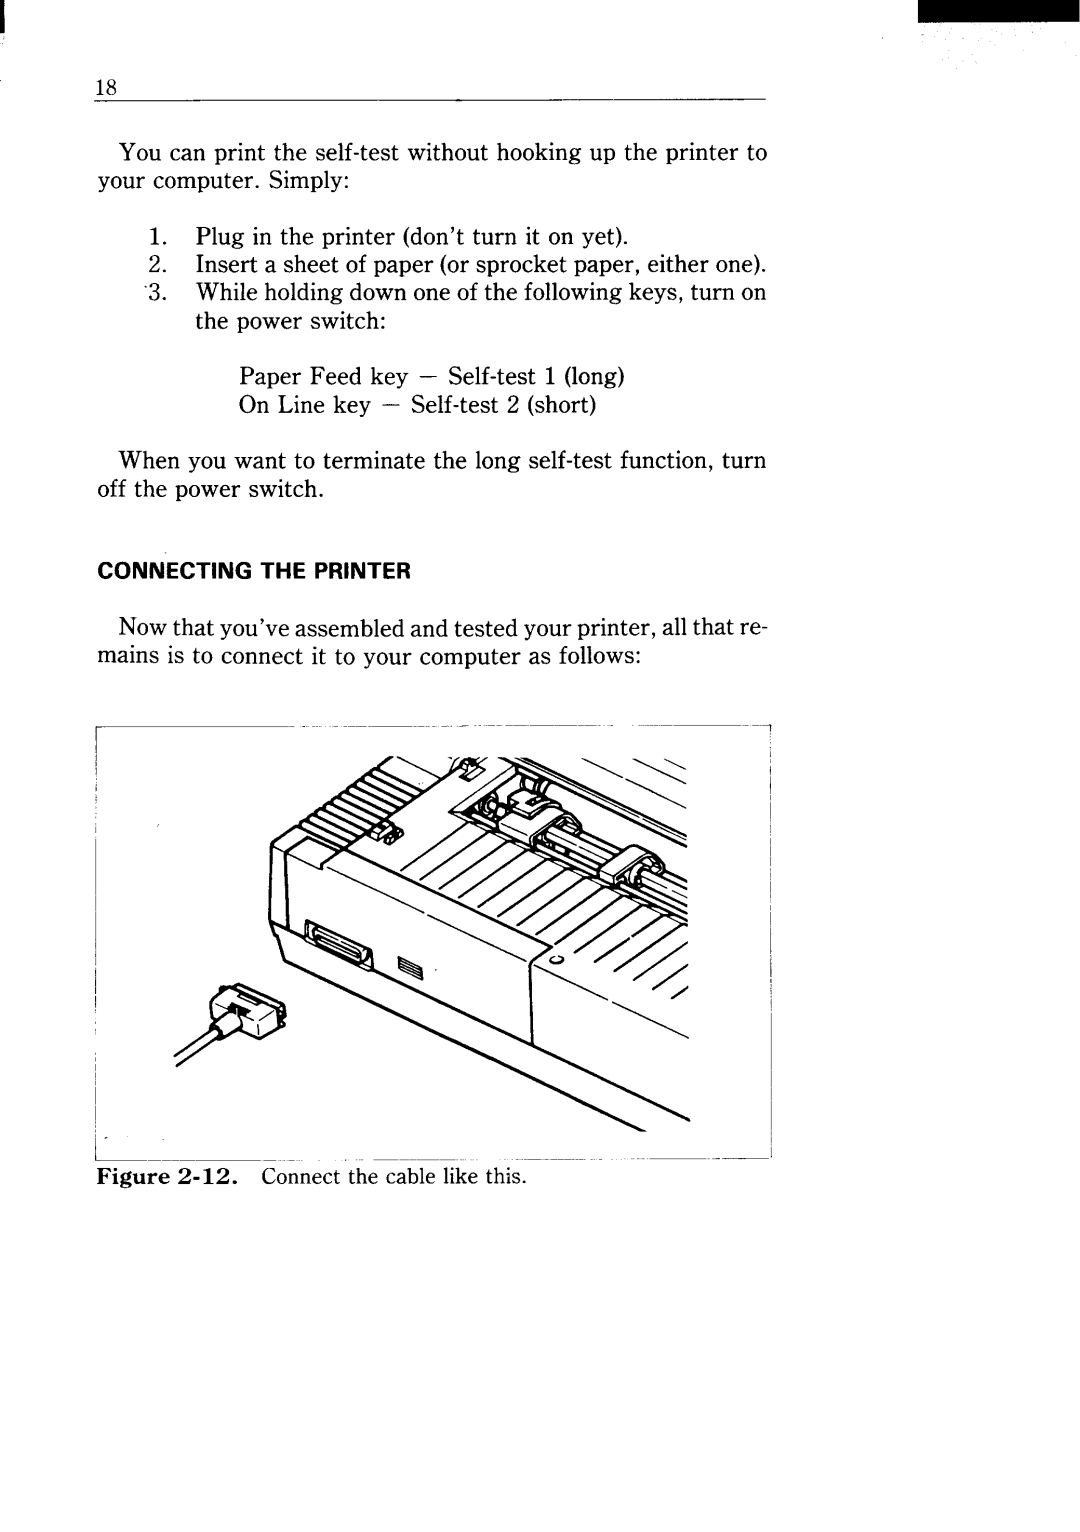 Star Micronics NX-15 user manual ~--””‘---”---”-”” 